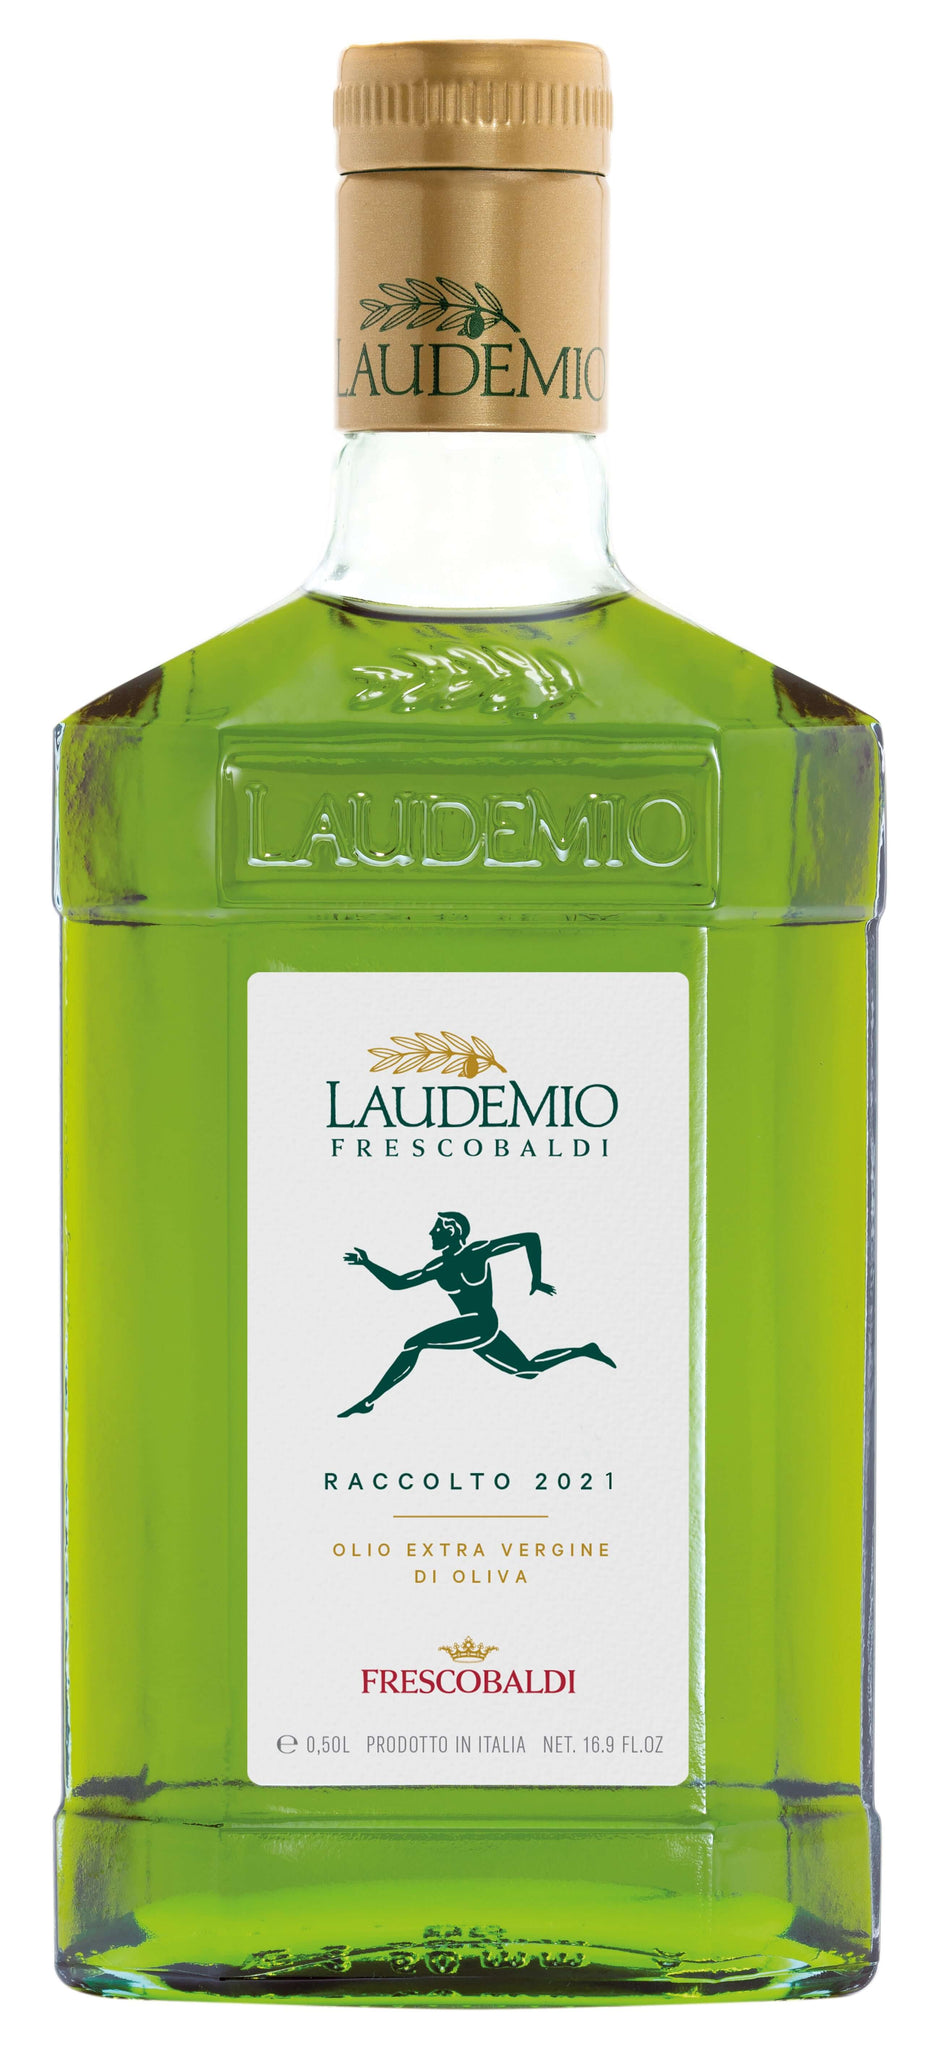 500 ml bottle of Frescobaldi Laudemio